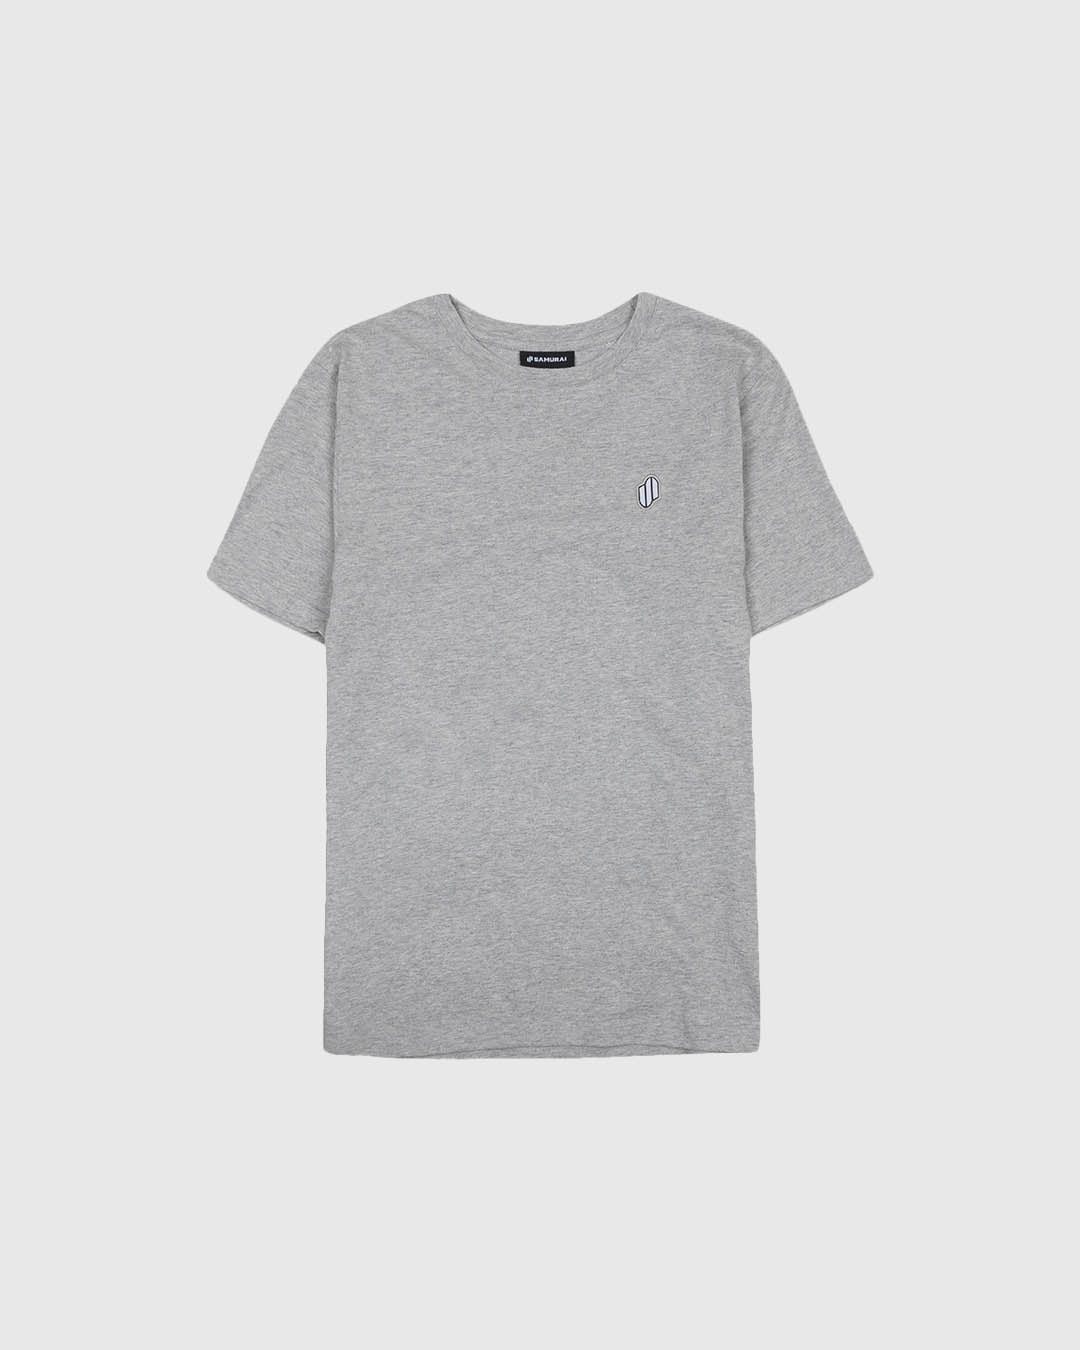 PFC: 002-1 - Men's T-Shirt - Grey Marl